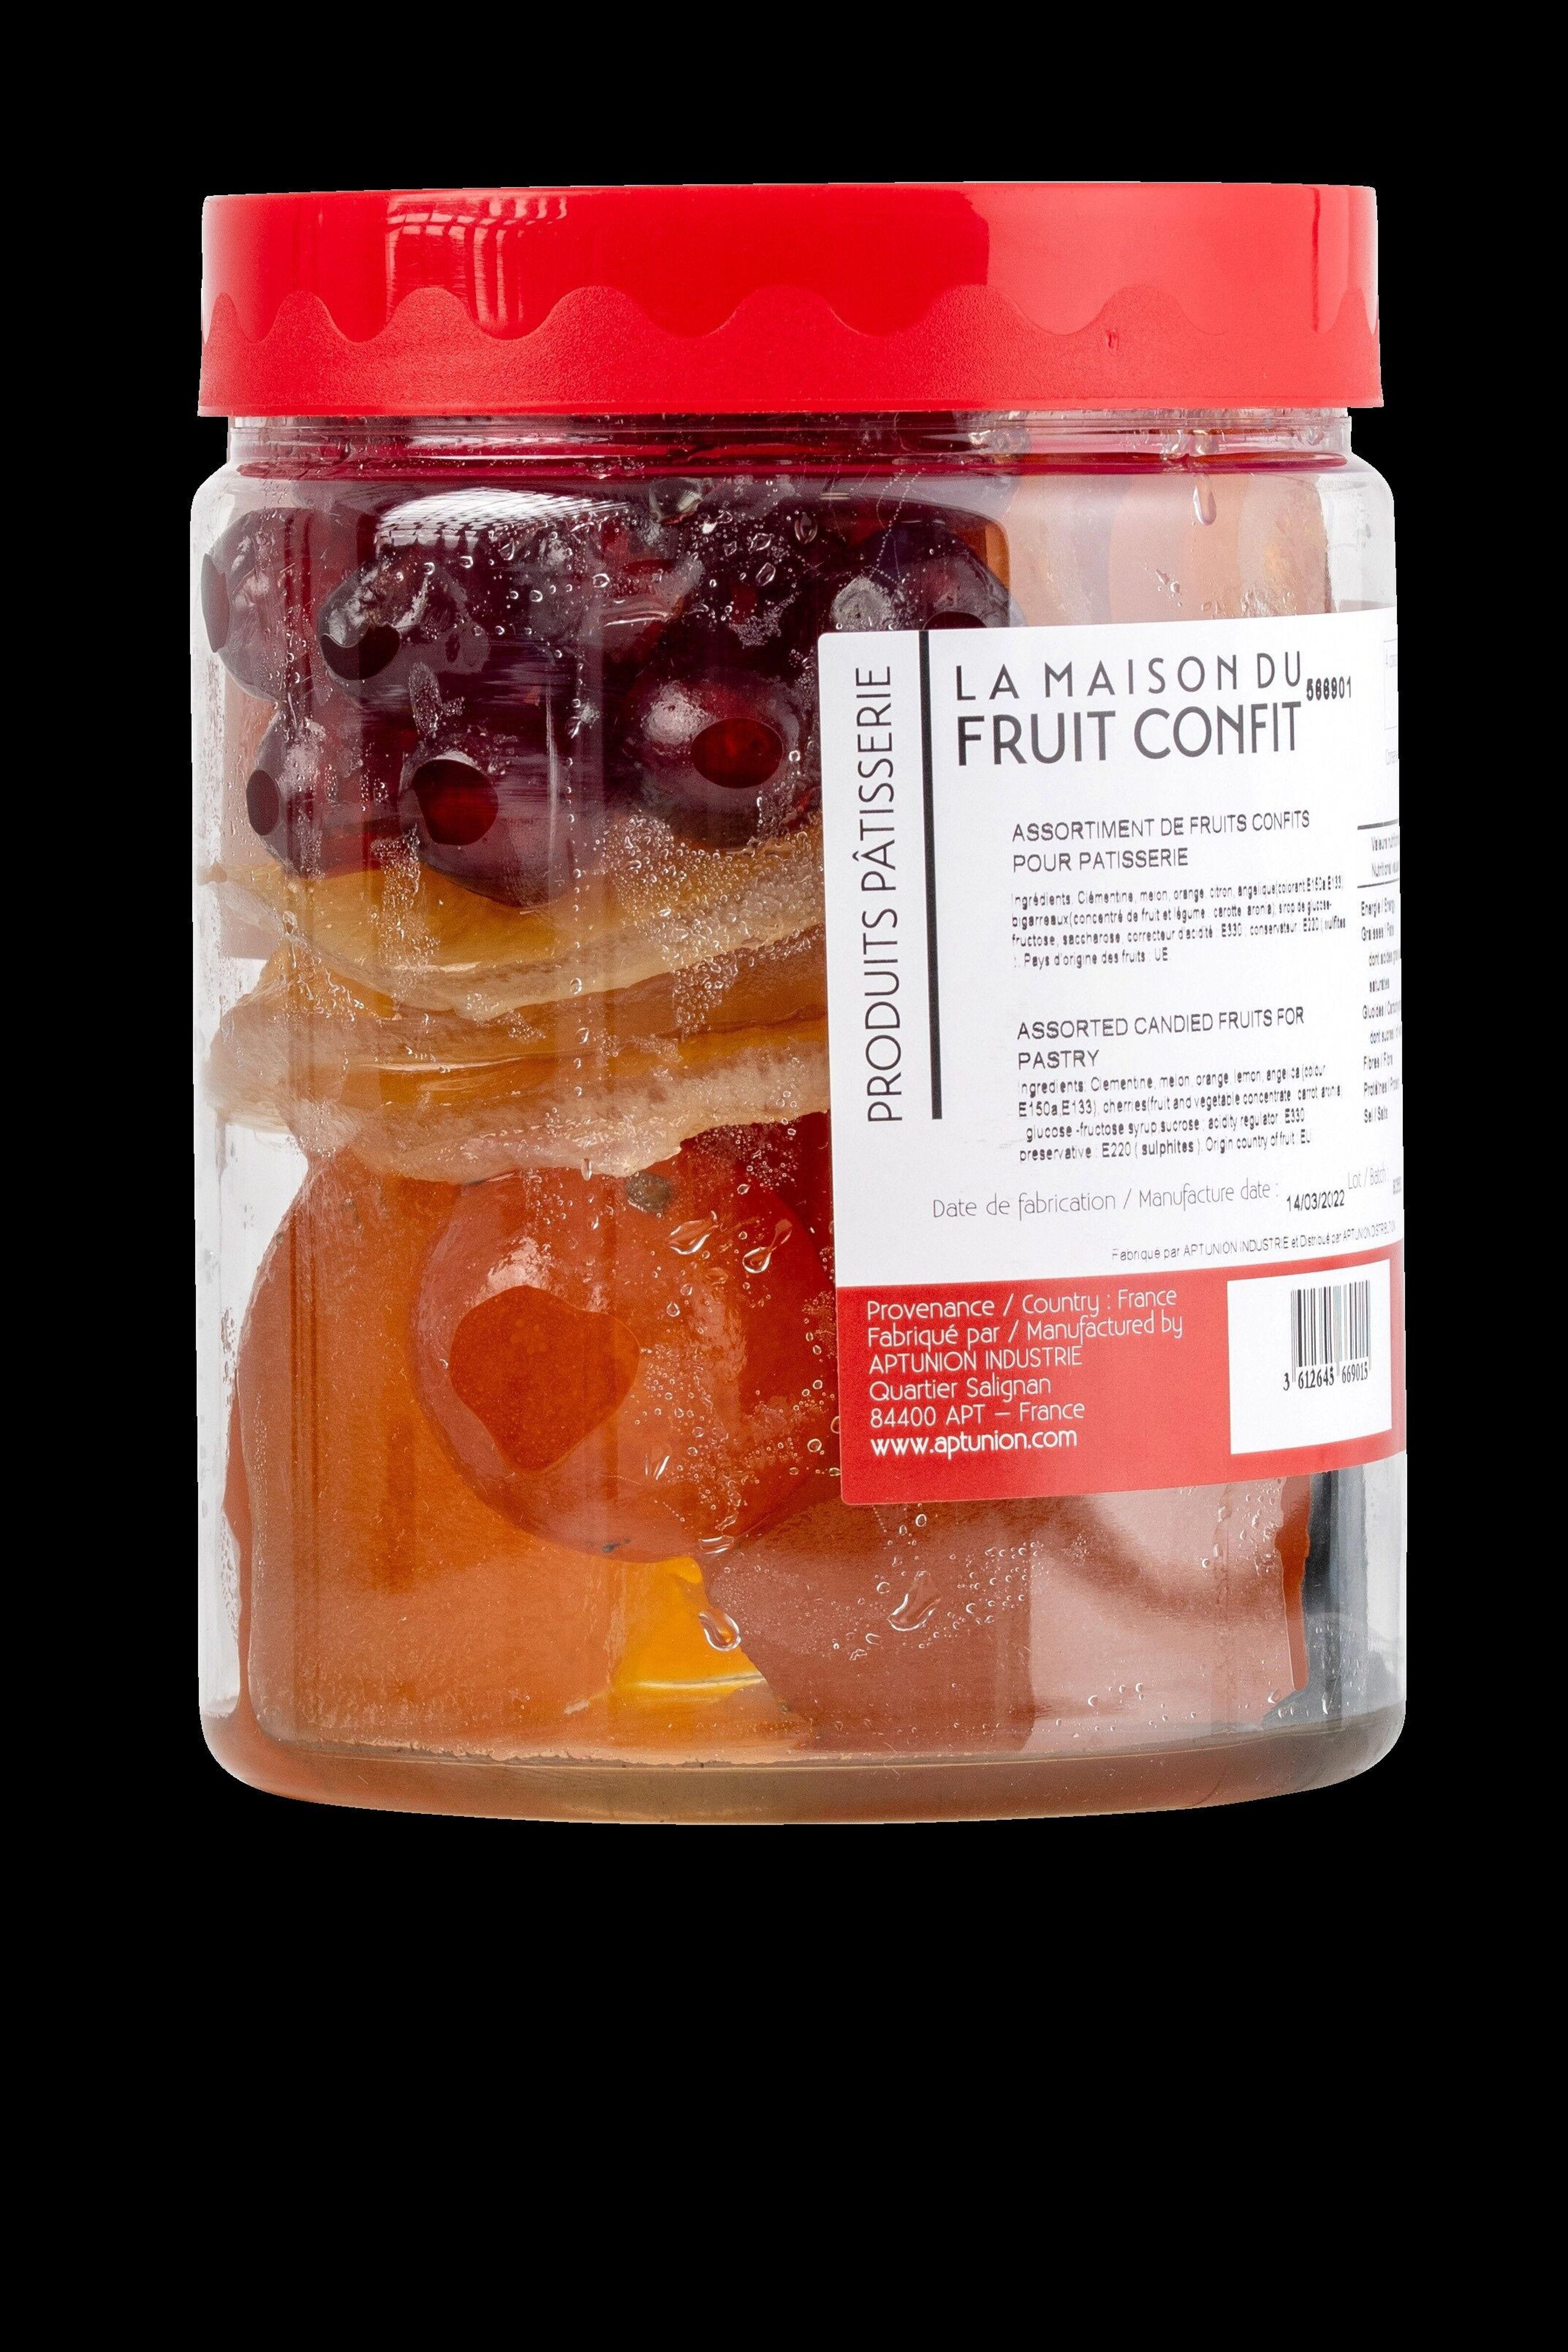 Berries Confit (jam)